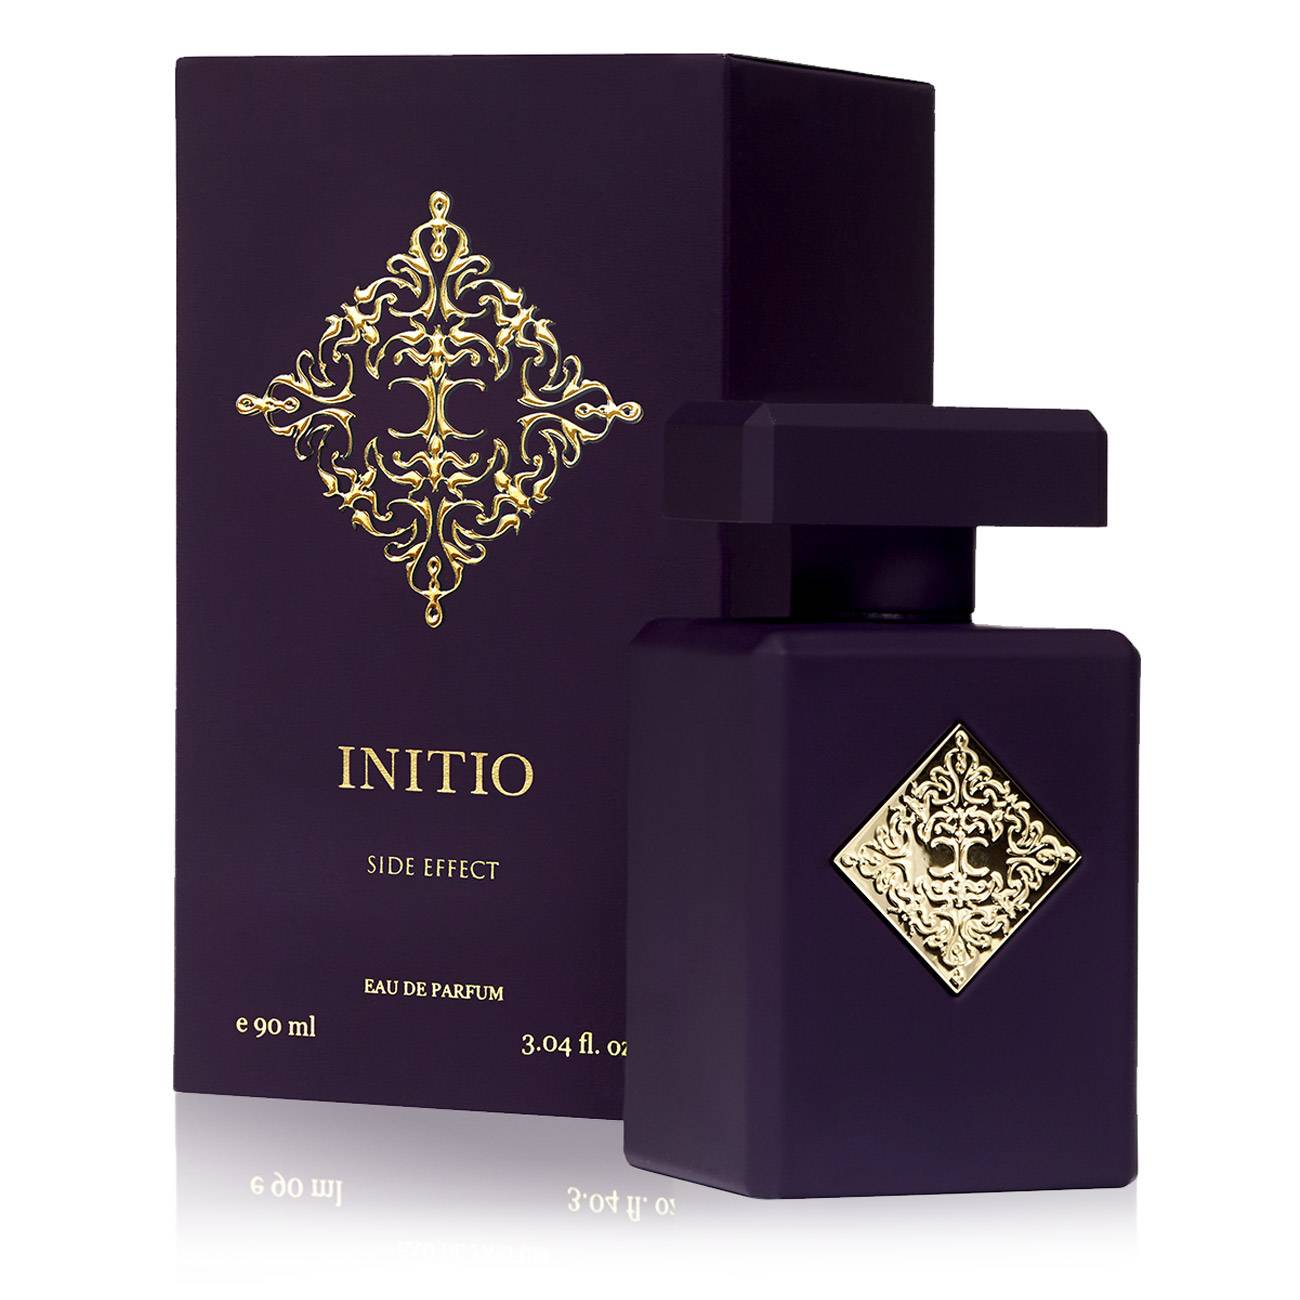 Parfum de niche Initio SIDE EFFECT 90ml cu comanda online